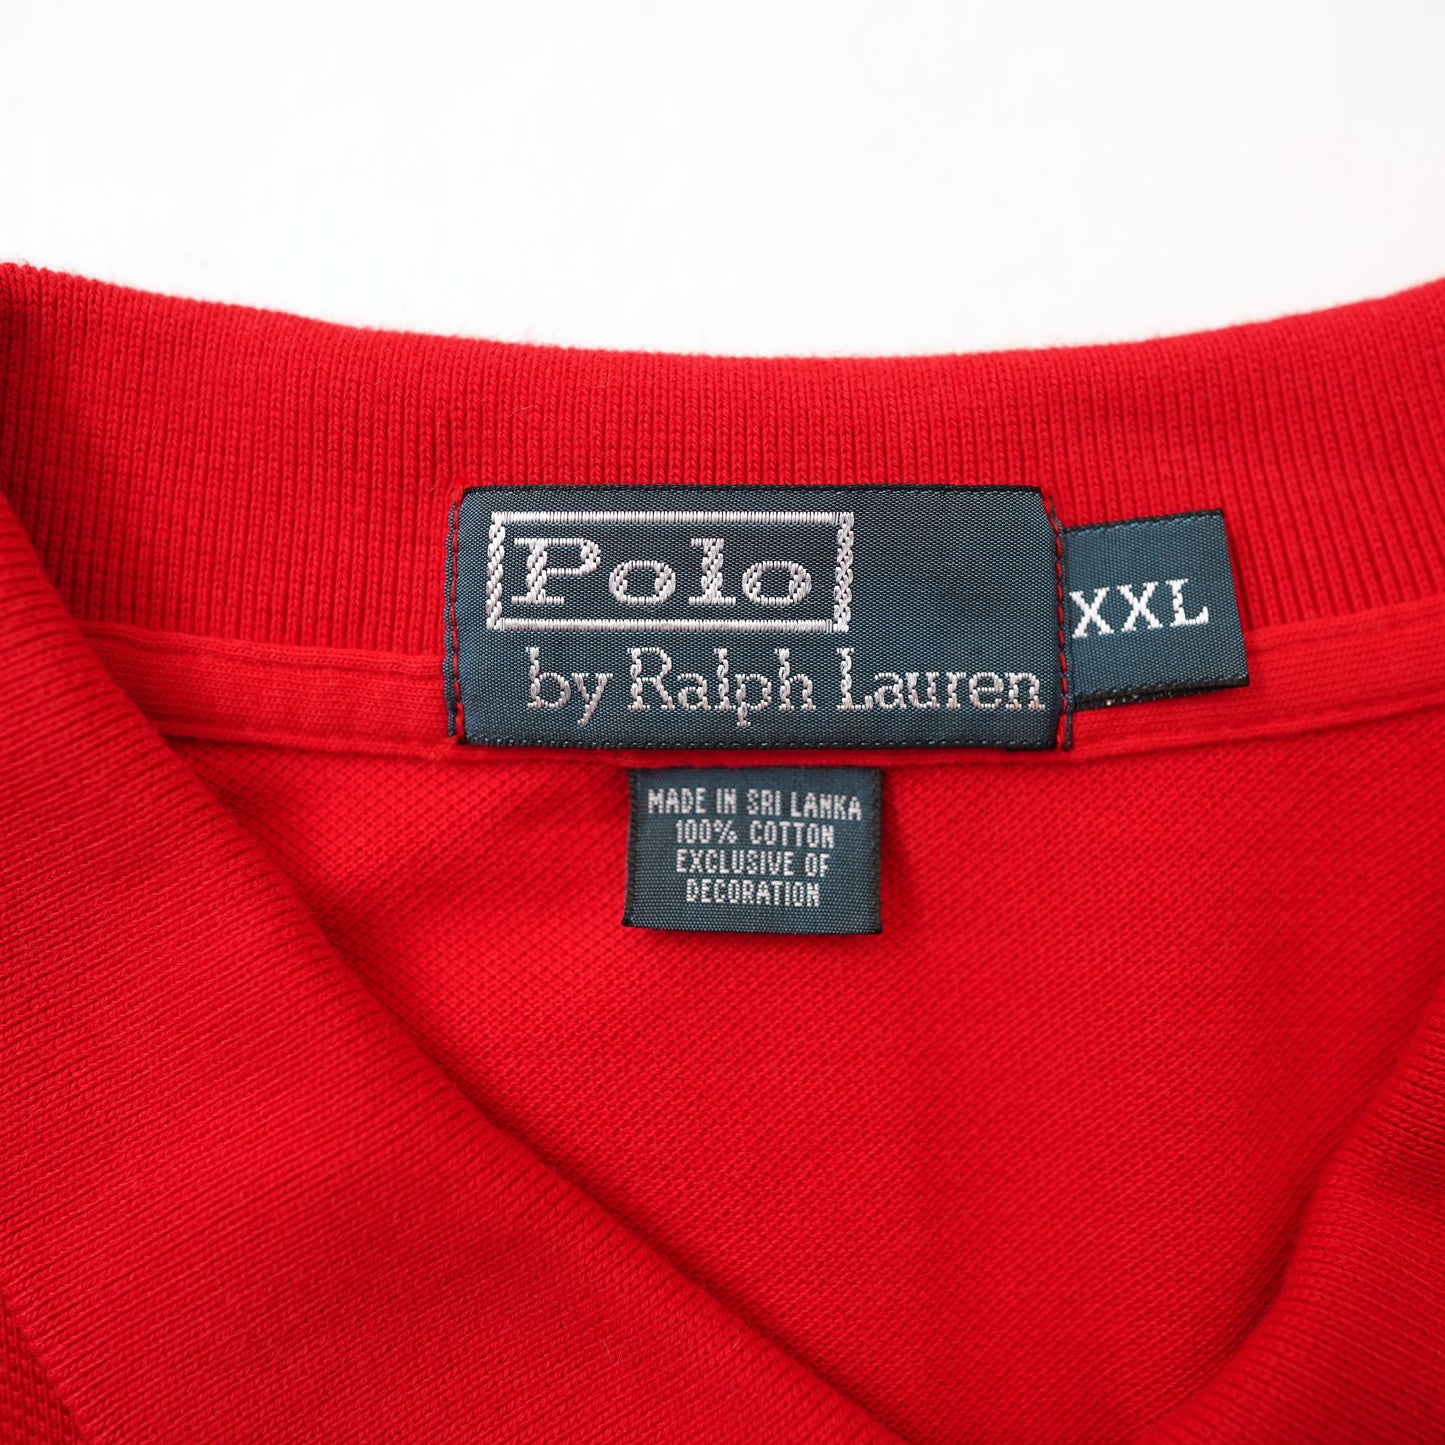 POLO by Ralph Lauren polo shirt